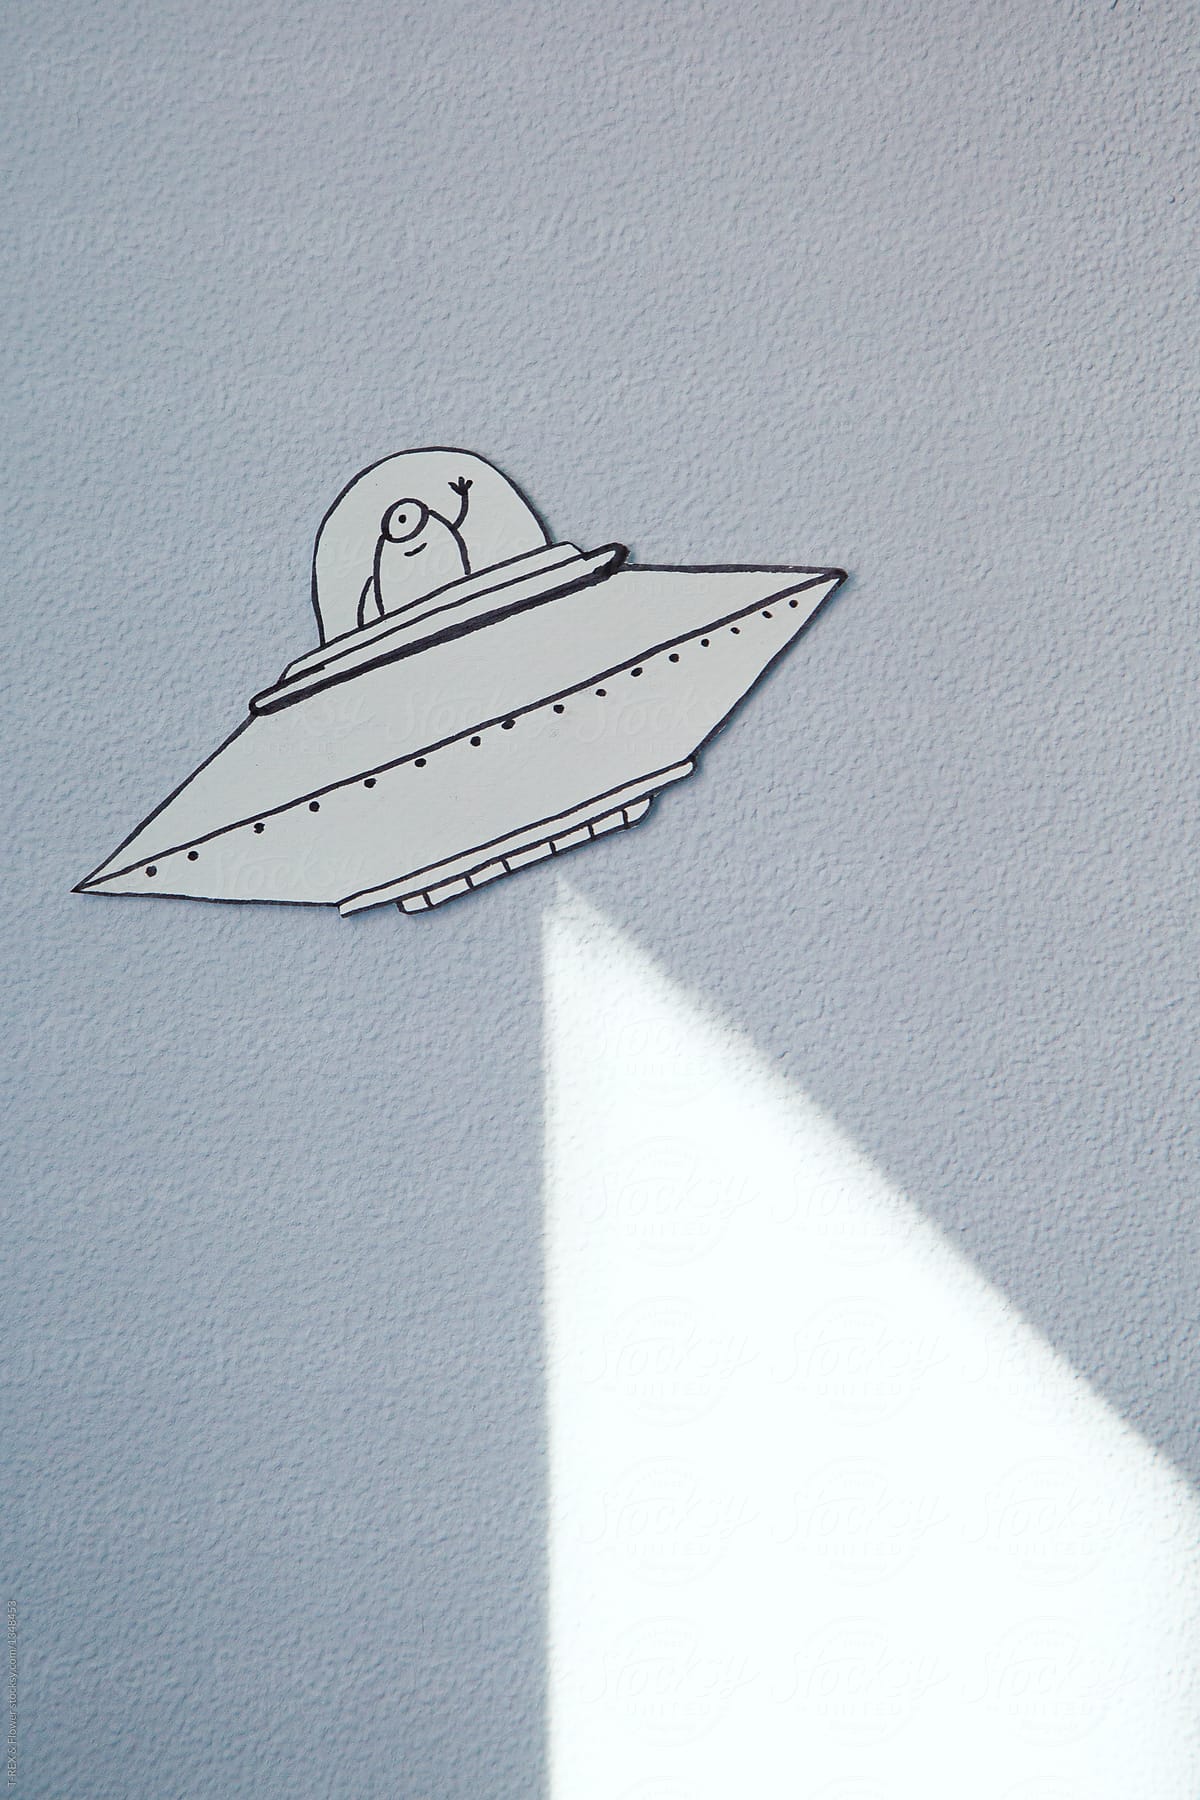 UFO sticker and sunbeam